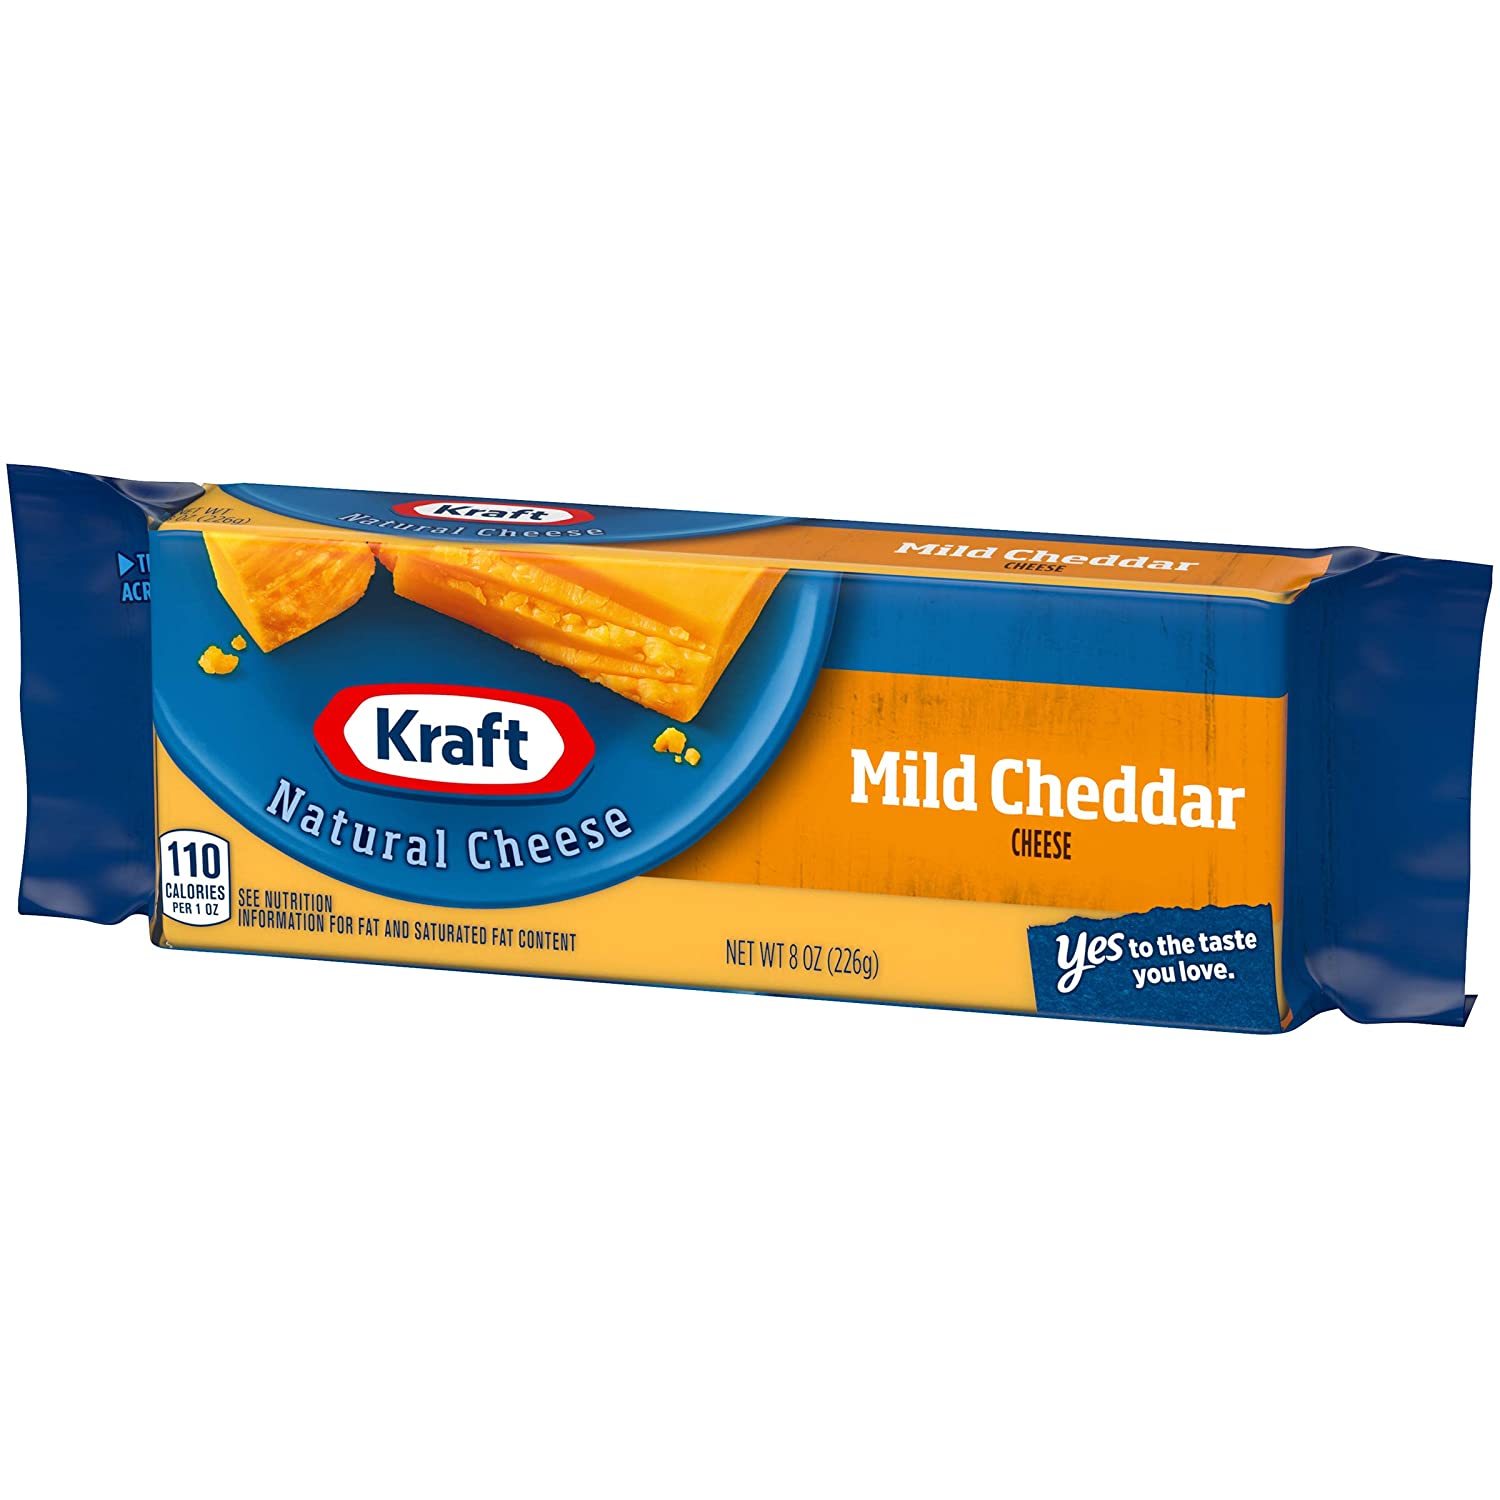 PHÔ MAI CHEDDAR KHỐI Kraft Mild Cheese, 226g 8oz